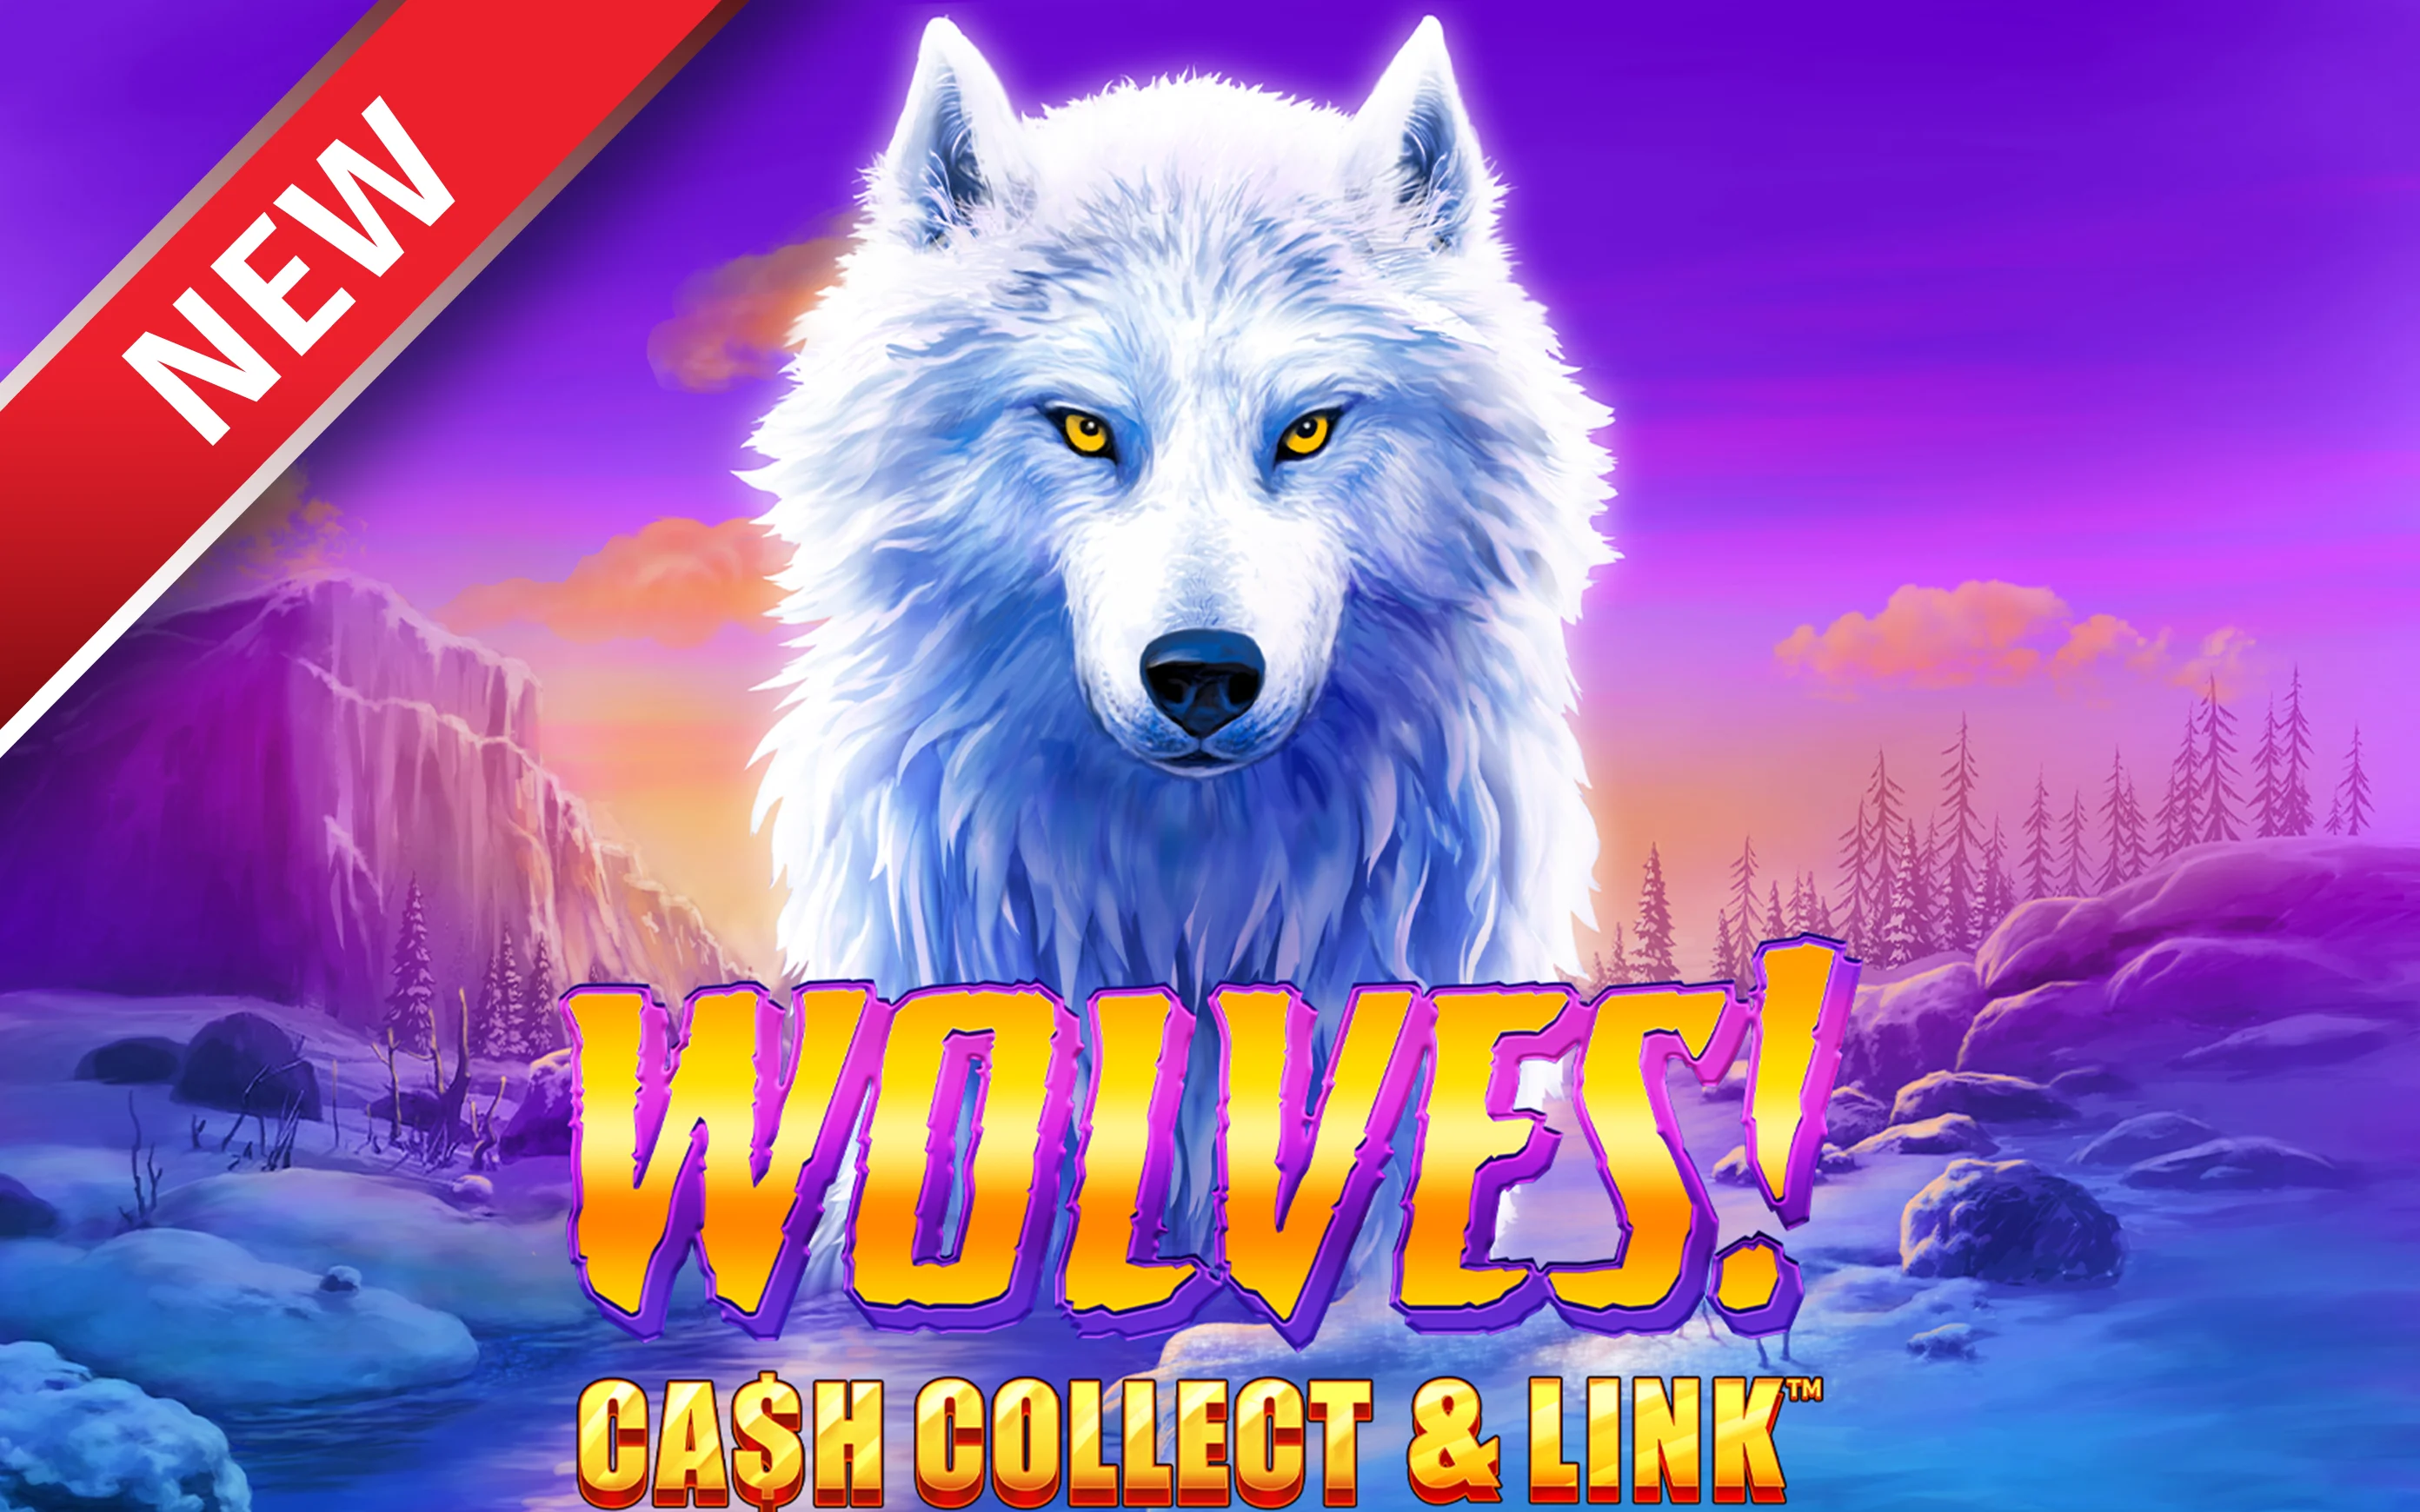 Starcasino.be online casino üzerinden Wolves! Cash Collect & Link™ oynayın